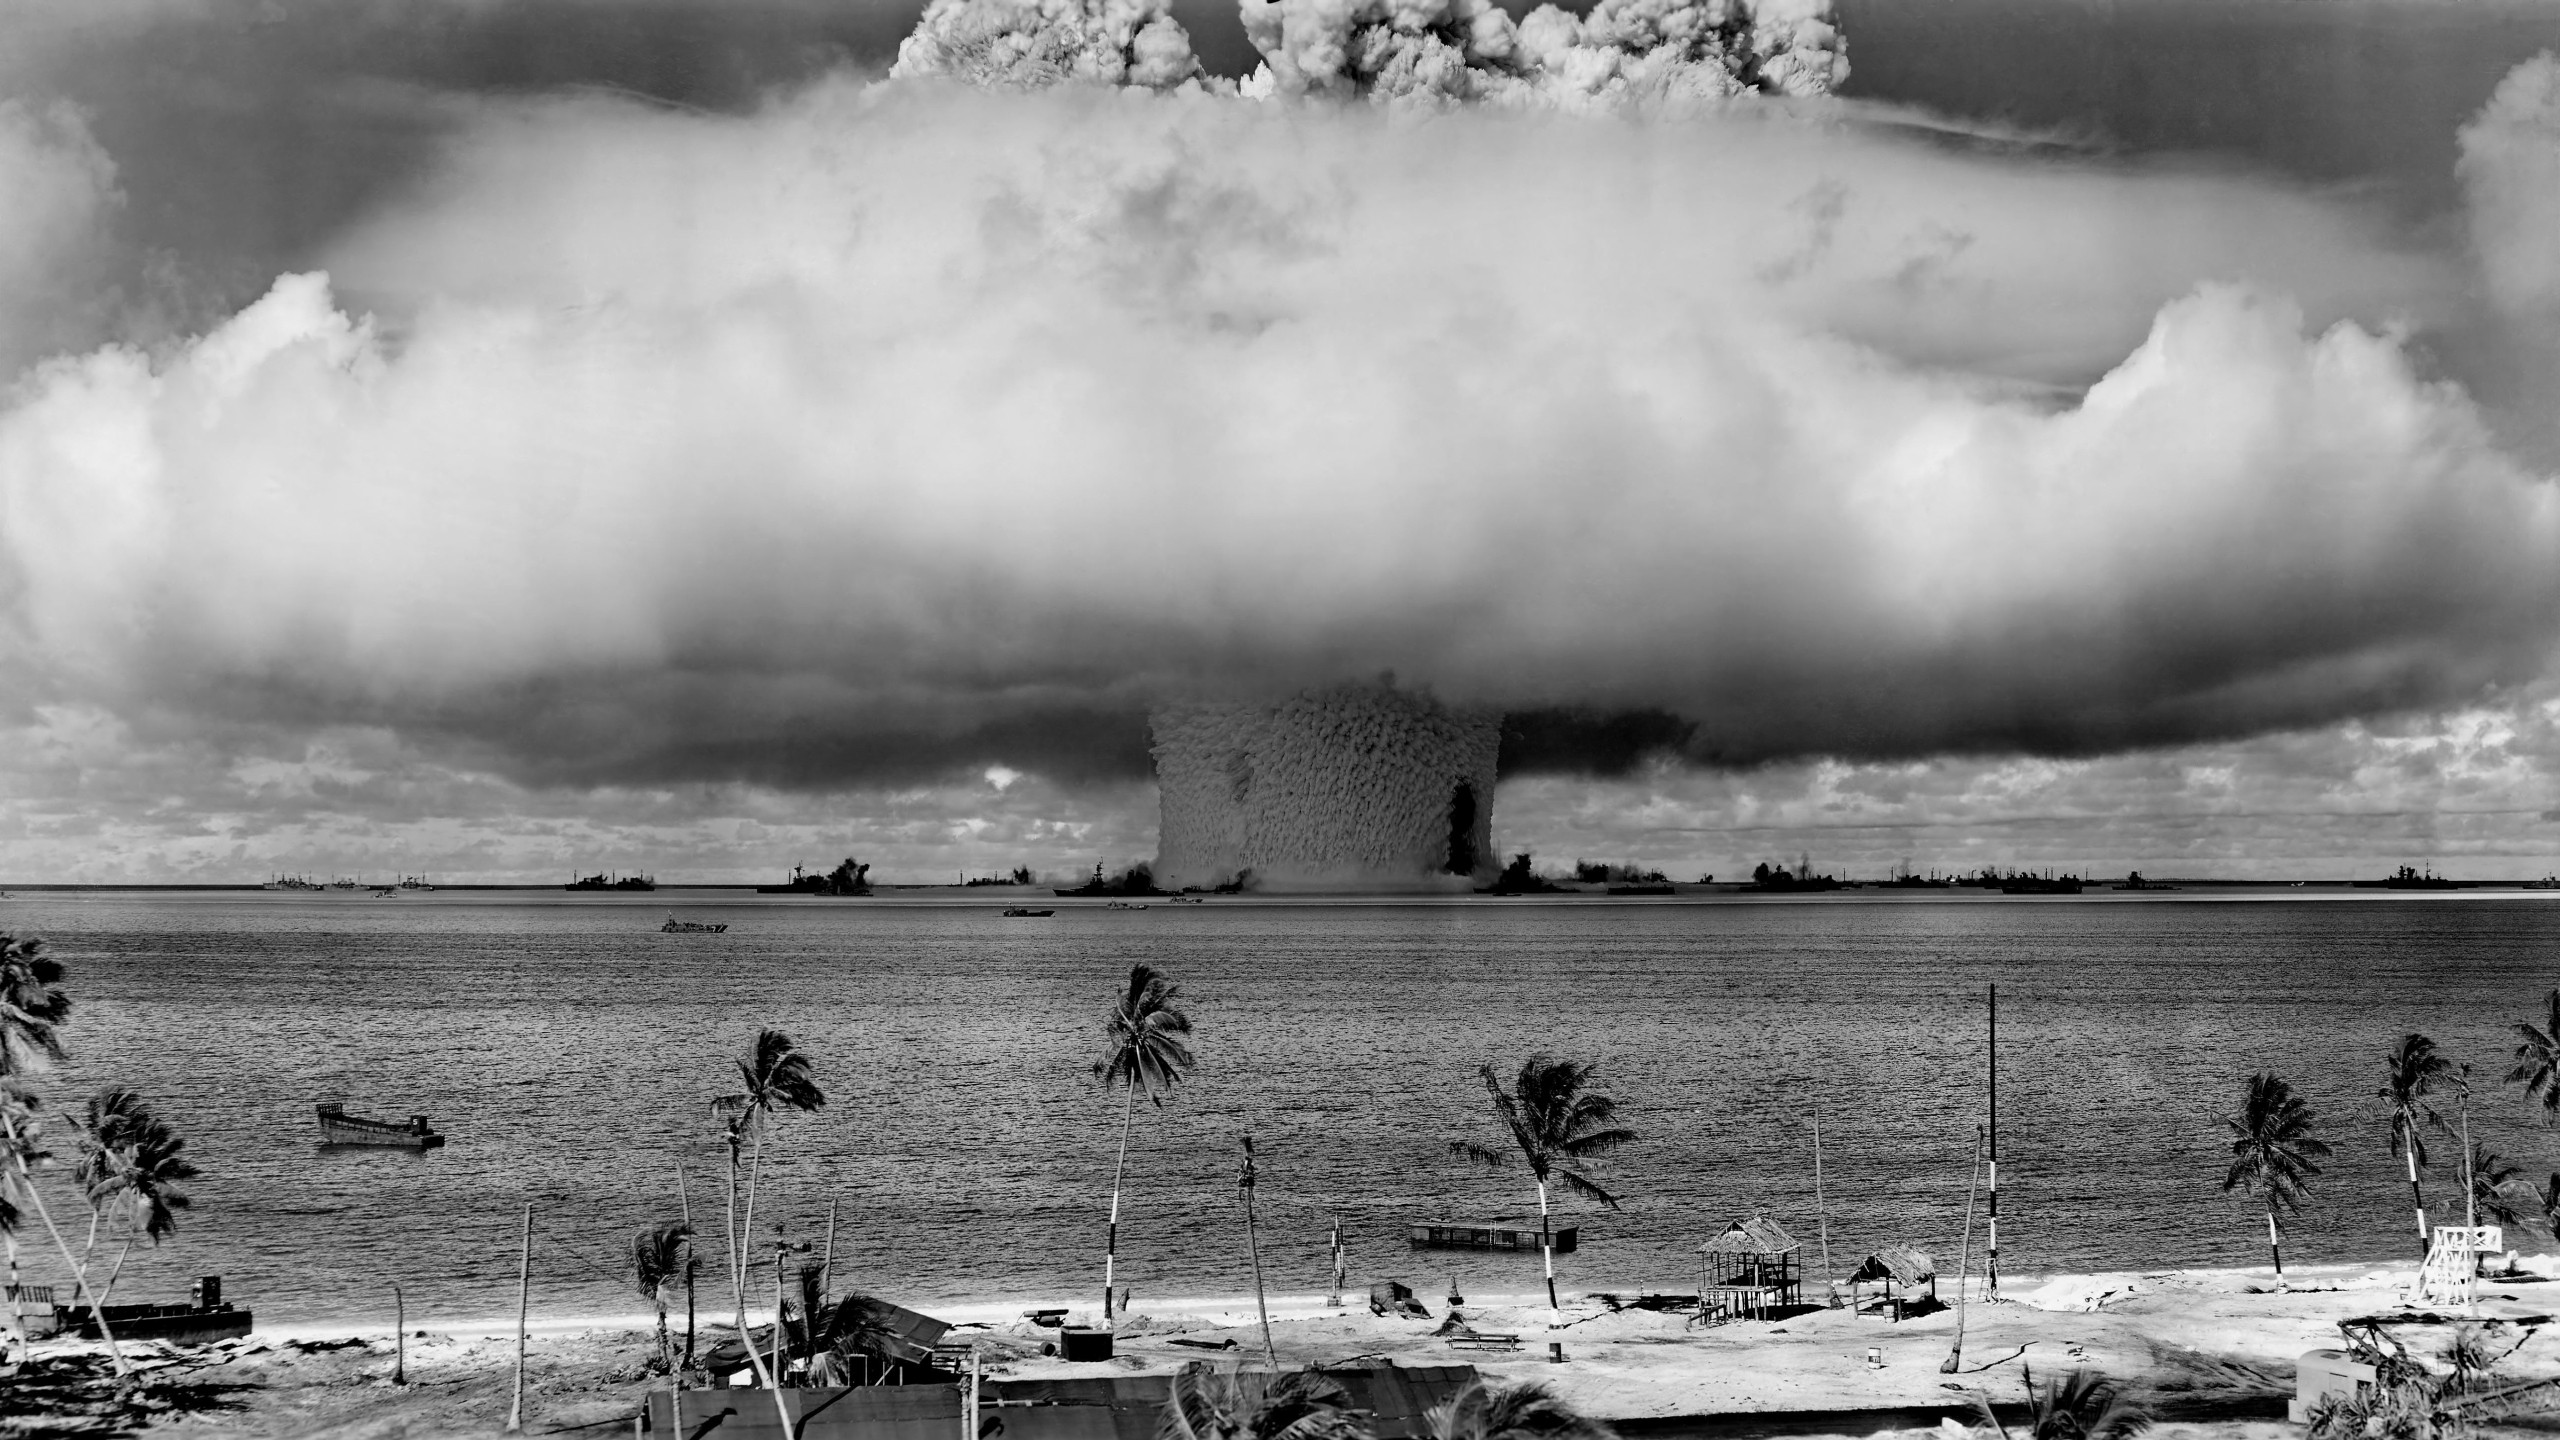 General 2560x1440 explosion monochrome Bikini Atoll mushroom clouds nuclear bombs Pacific Ocean